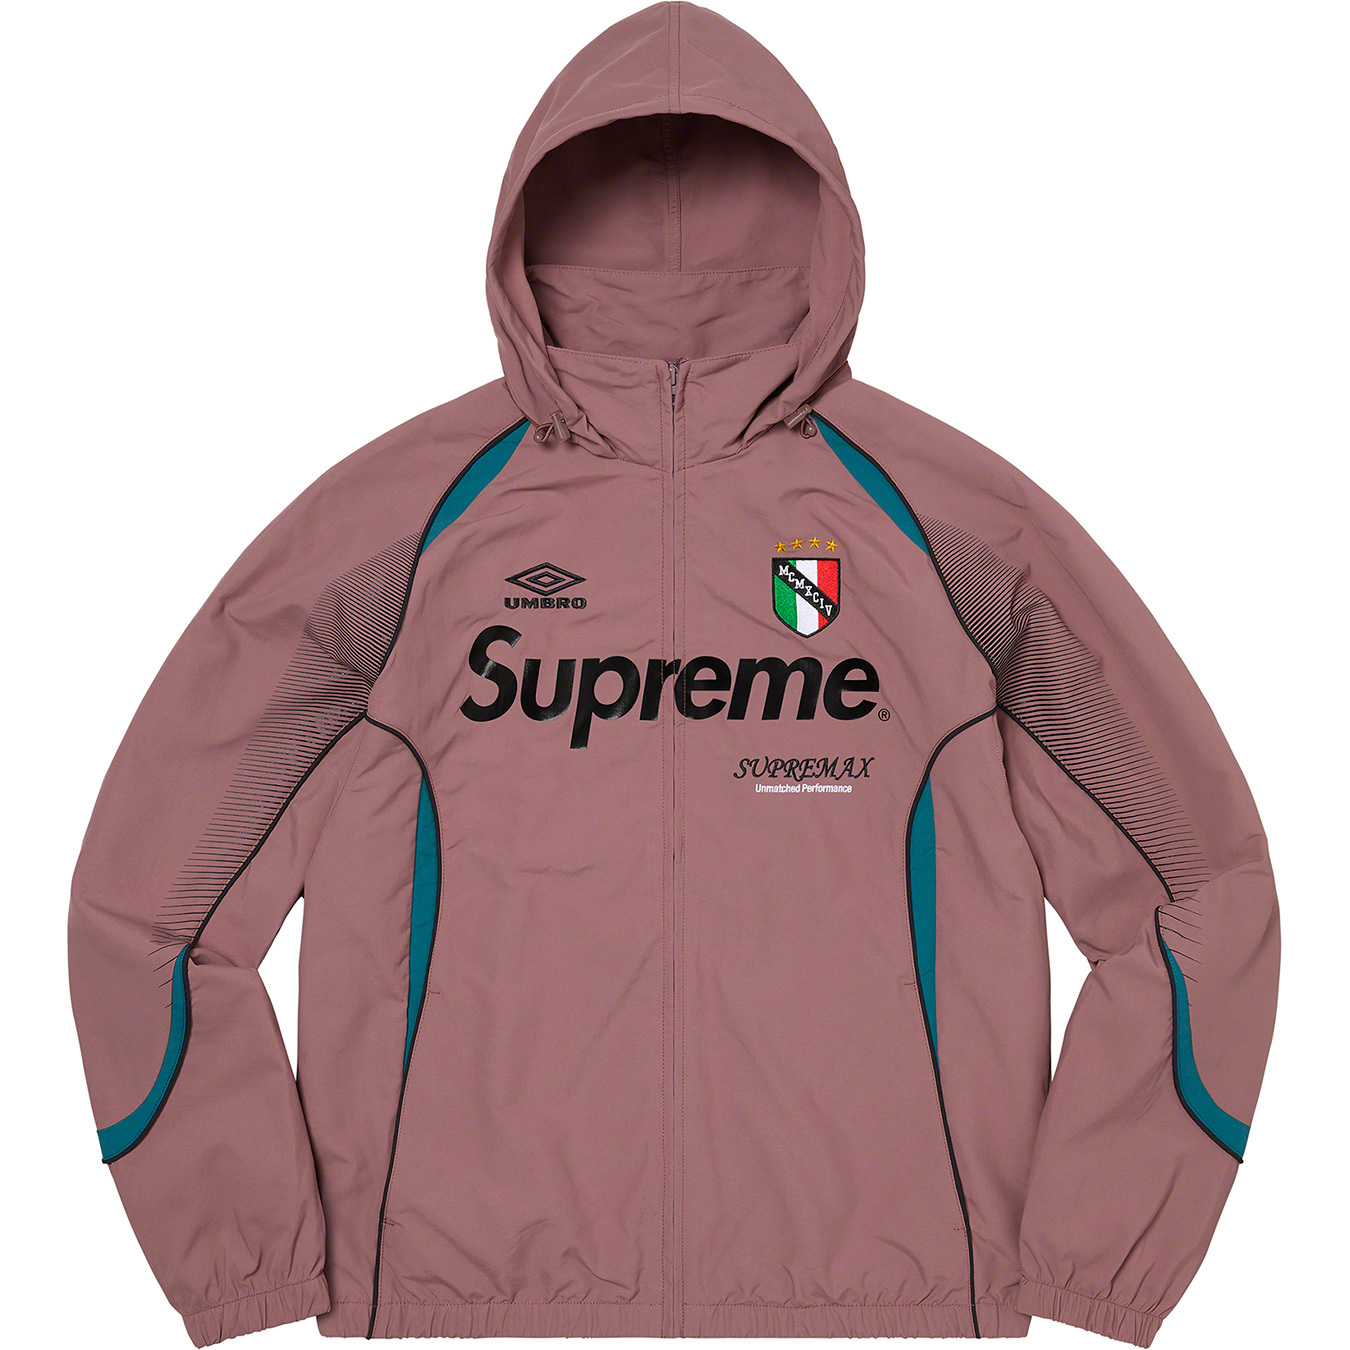 Supreme®/Umbro® Track Jacket   Supreme ss